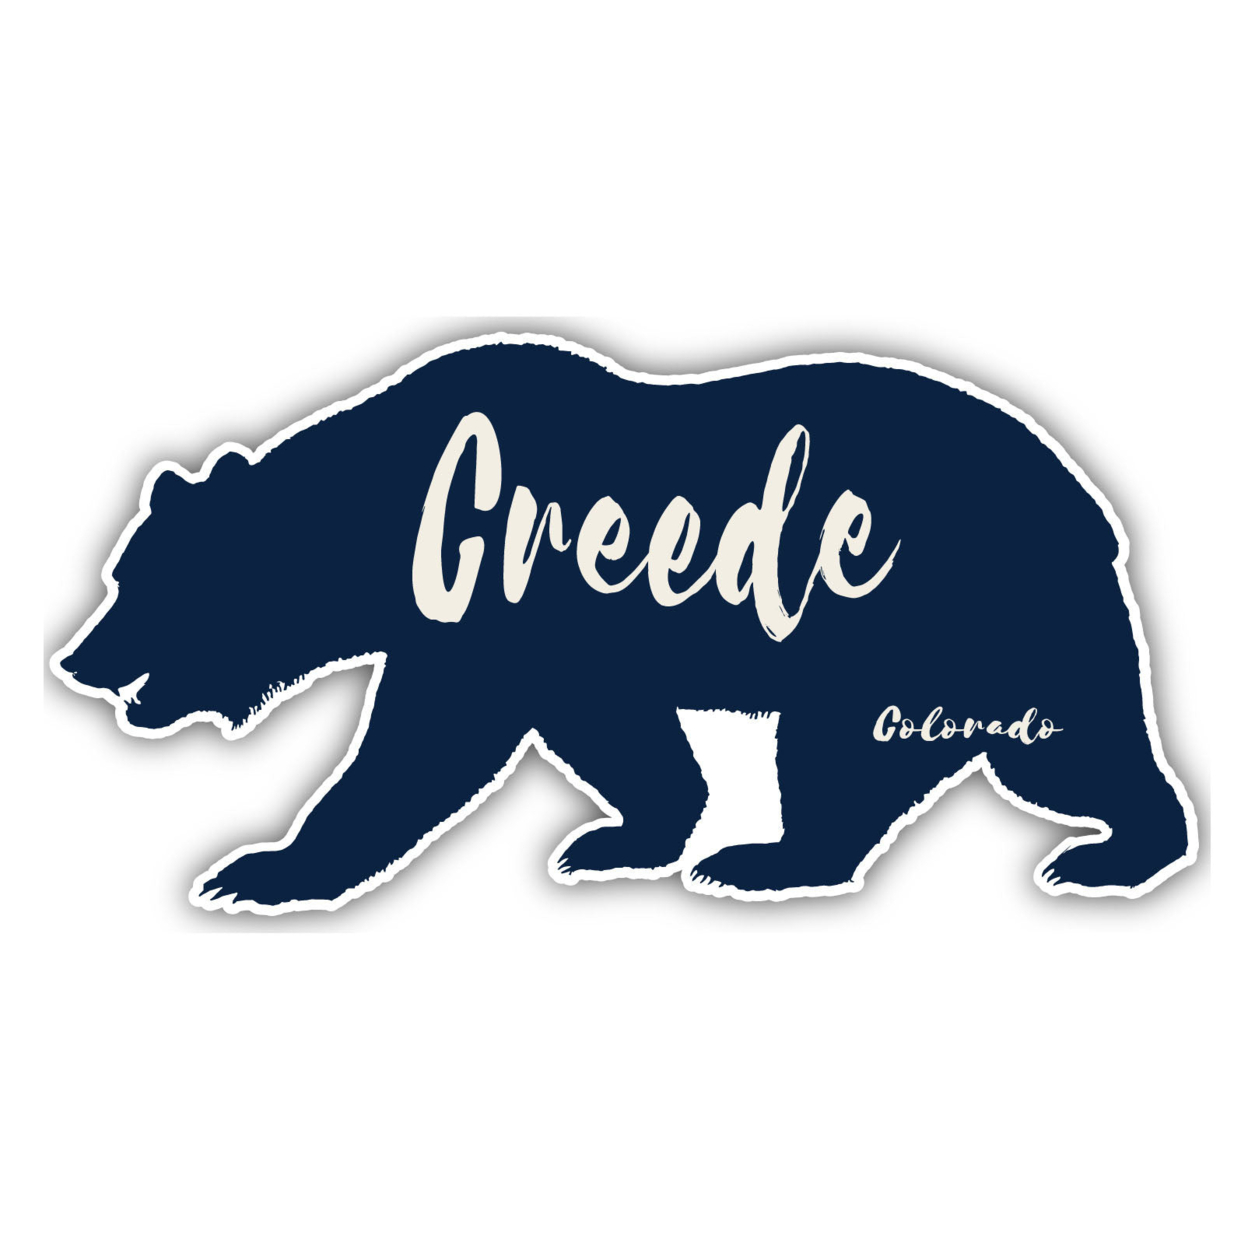 Creede Colorado Souvenir Decorative Stickers (Choose Theme And Size) - Single Unit, 12-Inch, Camp Life